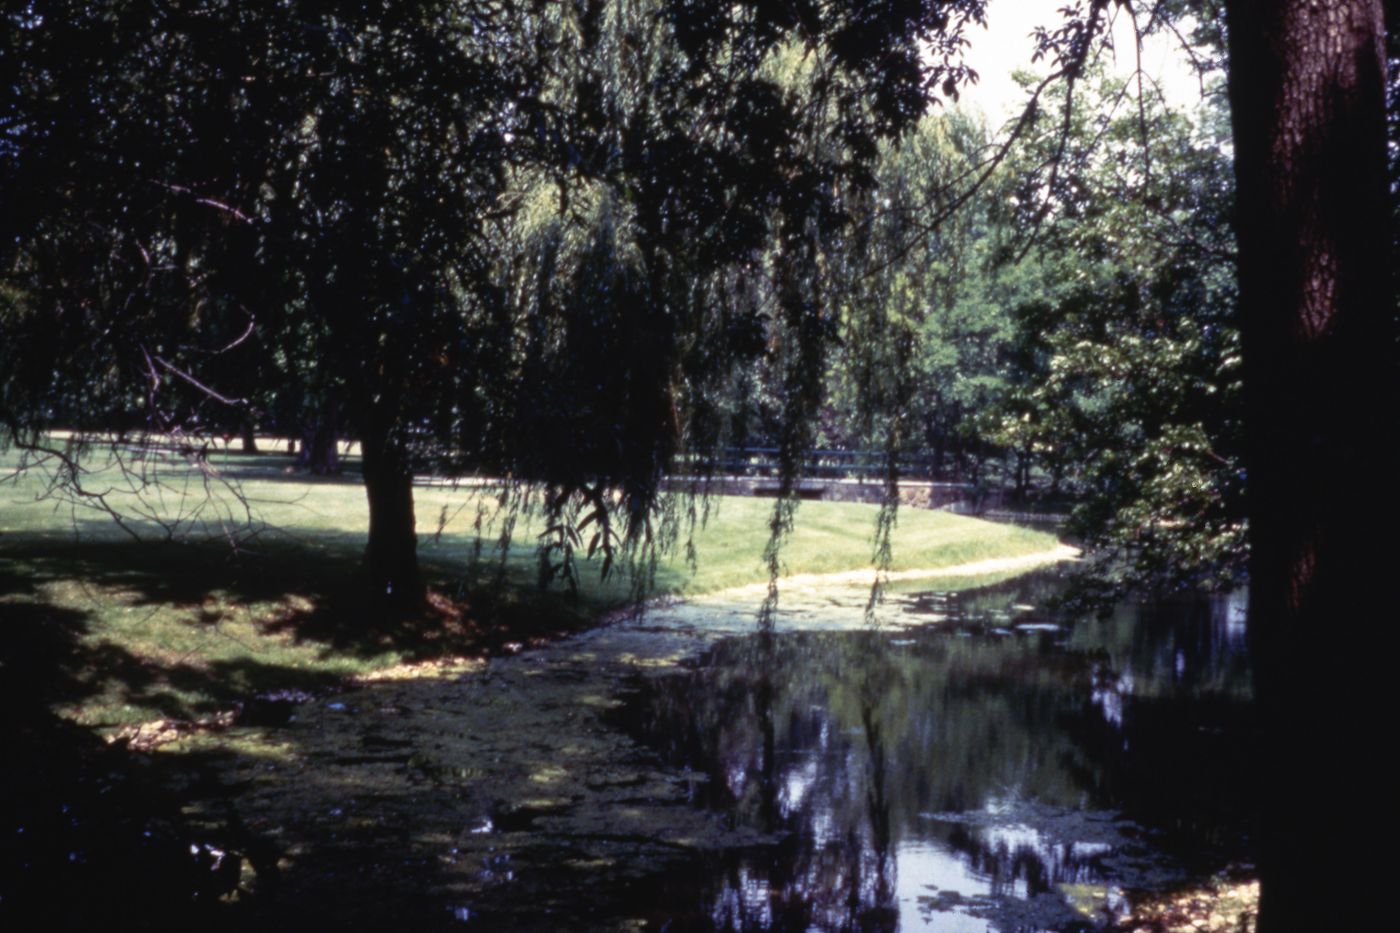 Photograph of park for research for Olmsted: L'origine del parco urbano e del parco naturale contemporaneo